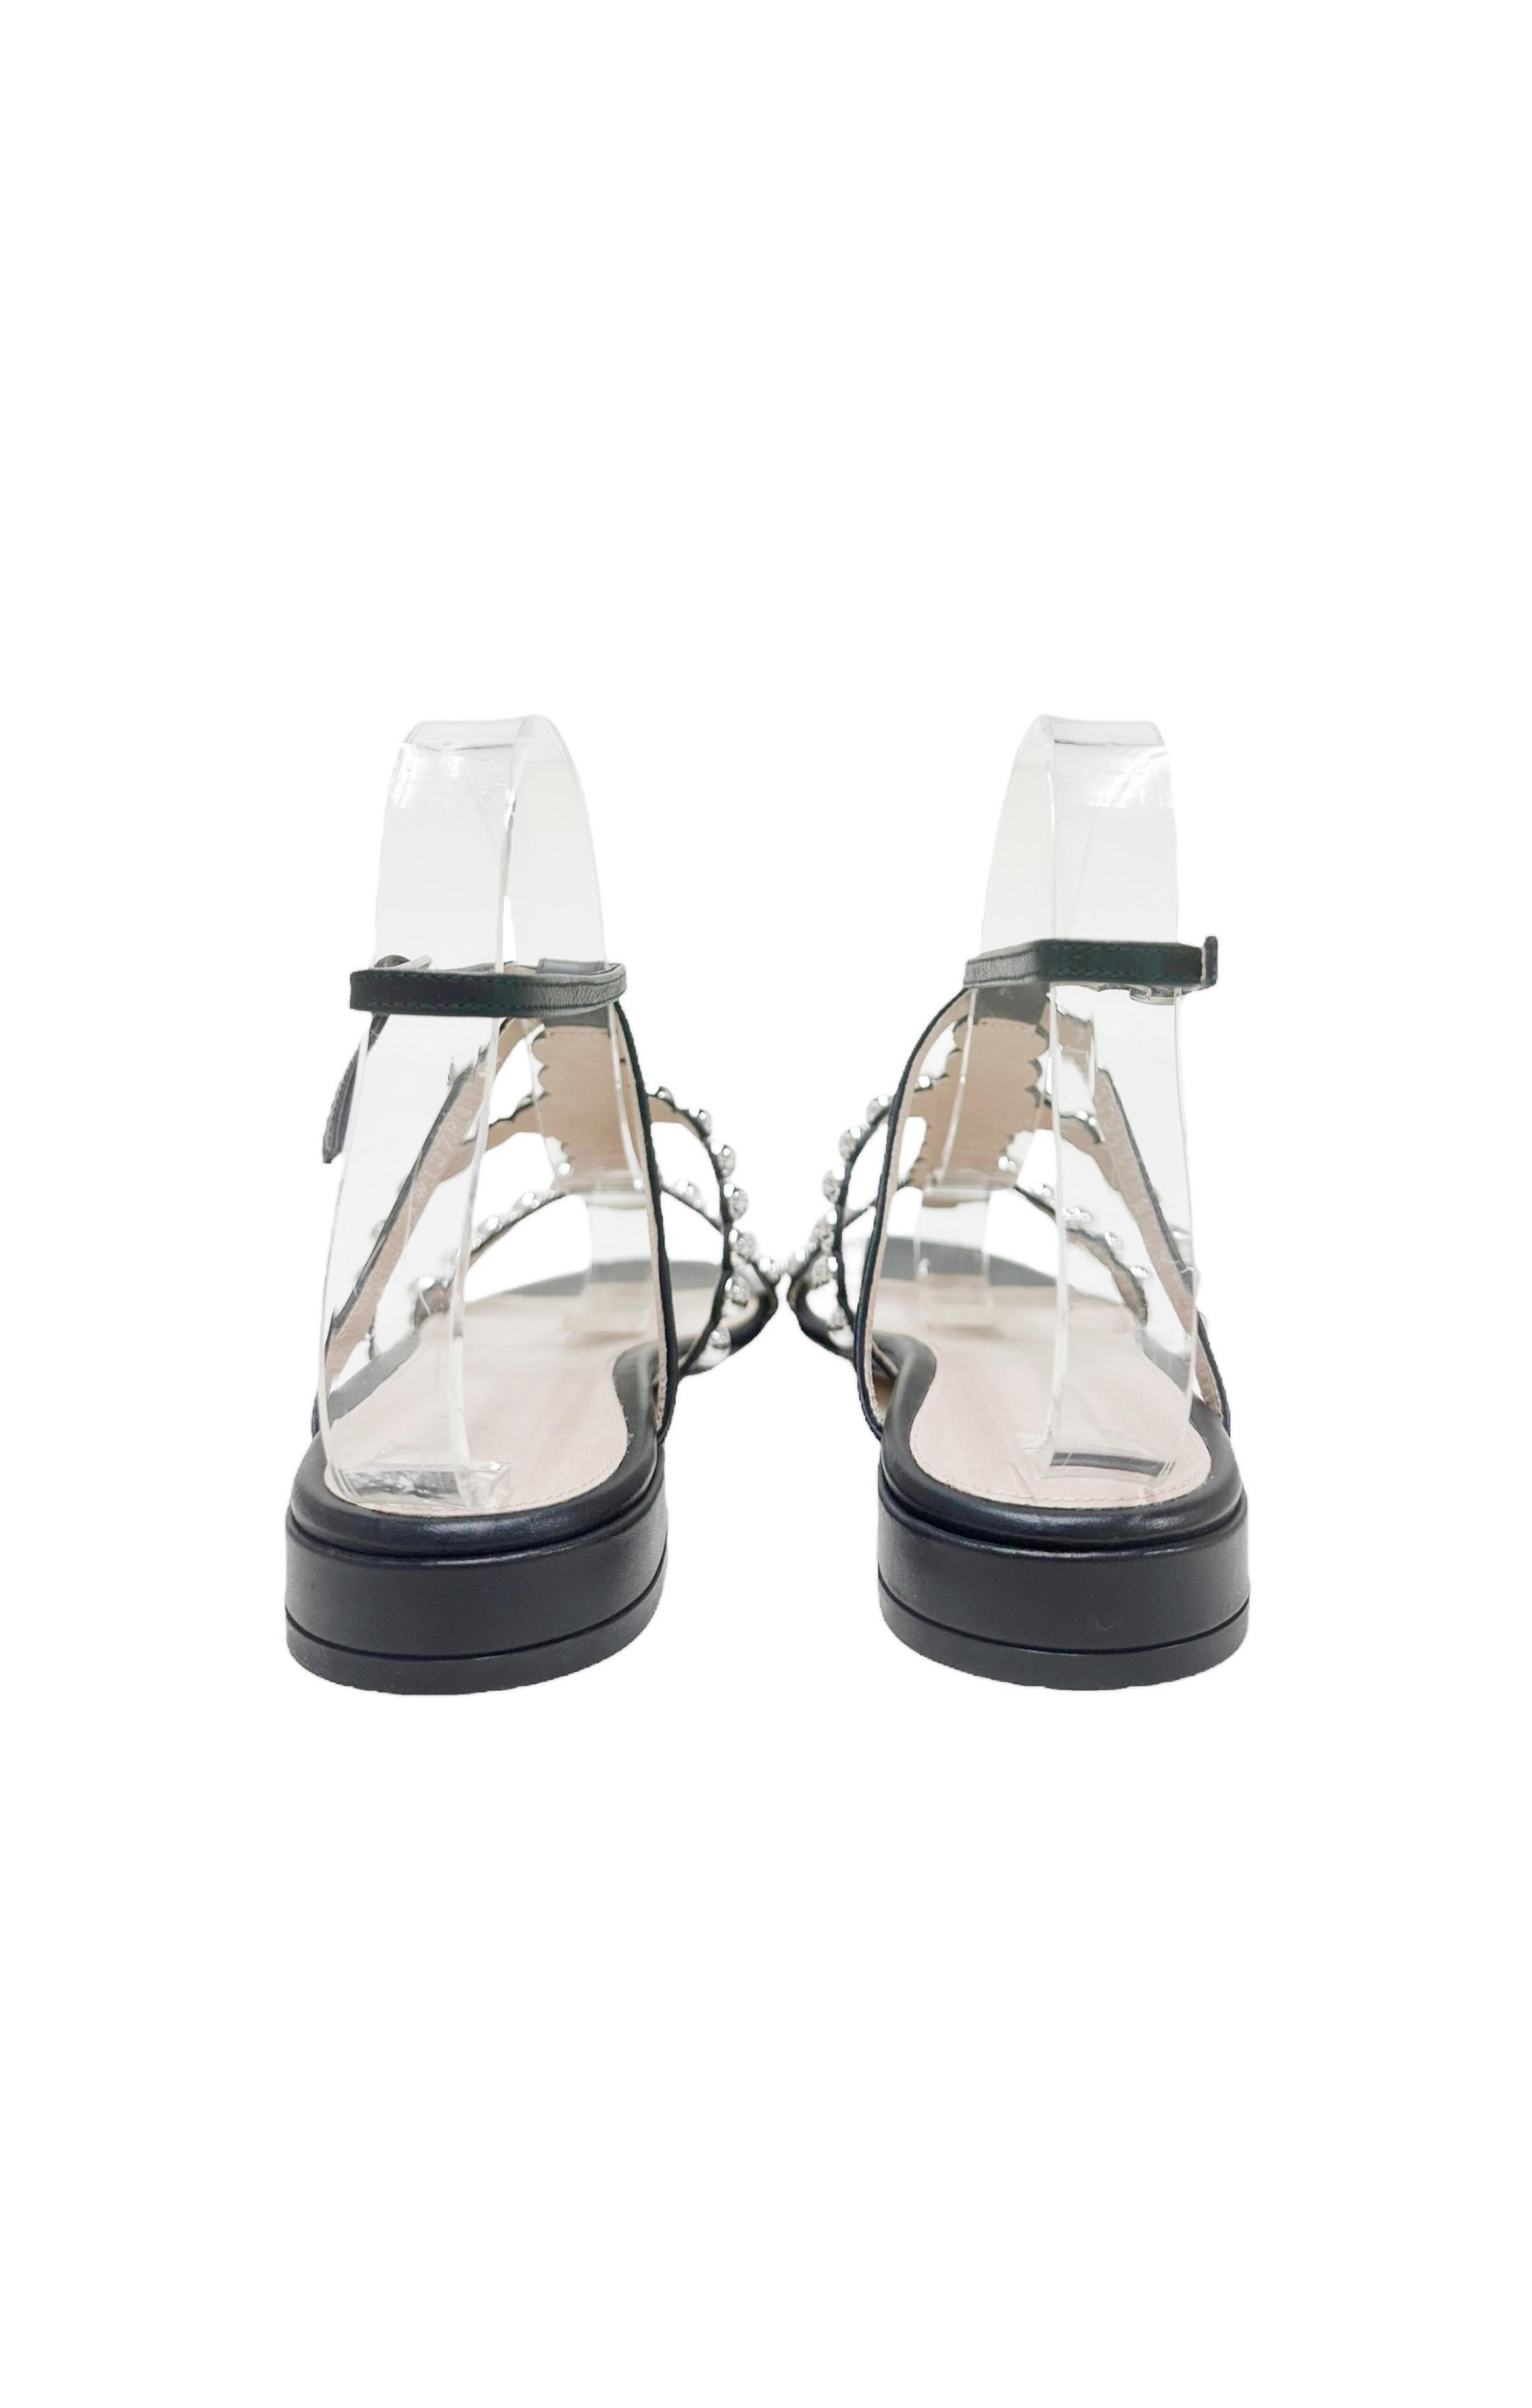 STUART WEITZMAN (NEW) Sandals Size: EUR 38 / Fit like 8-8.5